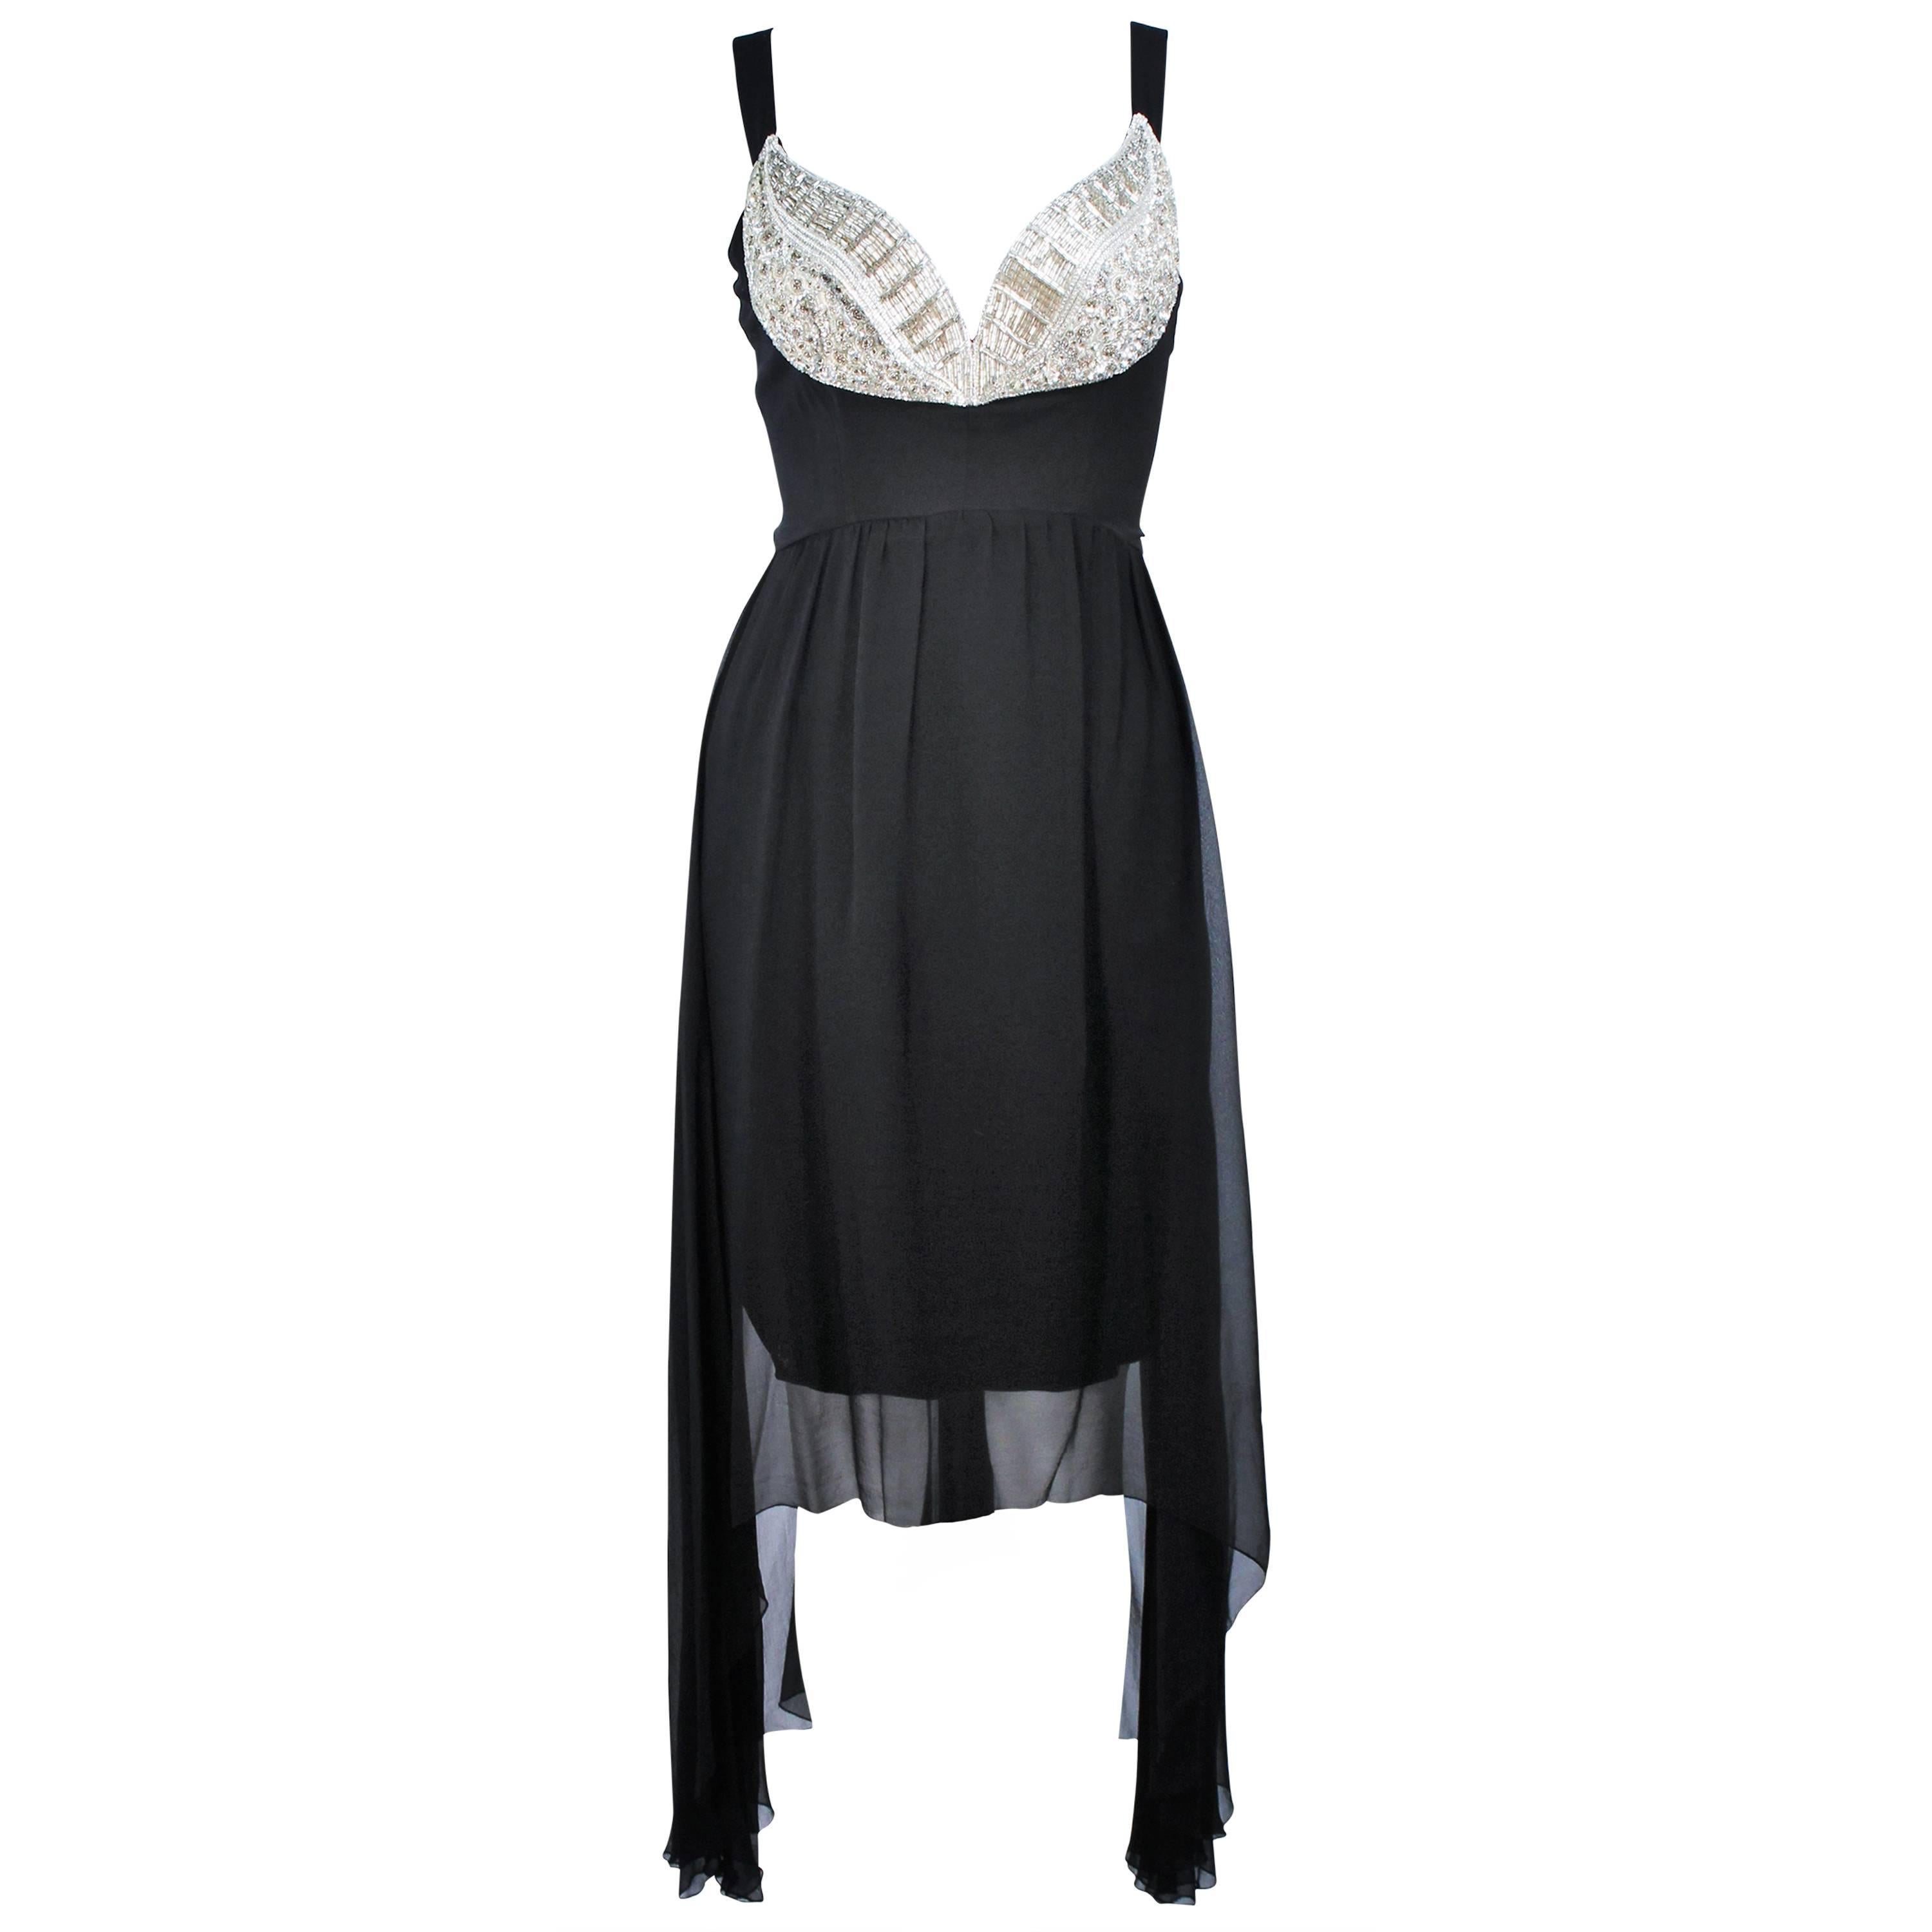 KARL LAGERFELD Black Stretch Silk Chiffon Dress with Embellished Bust Size 40 